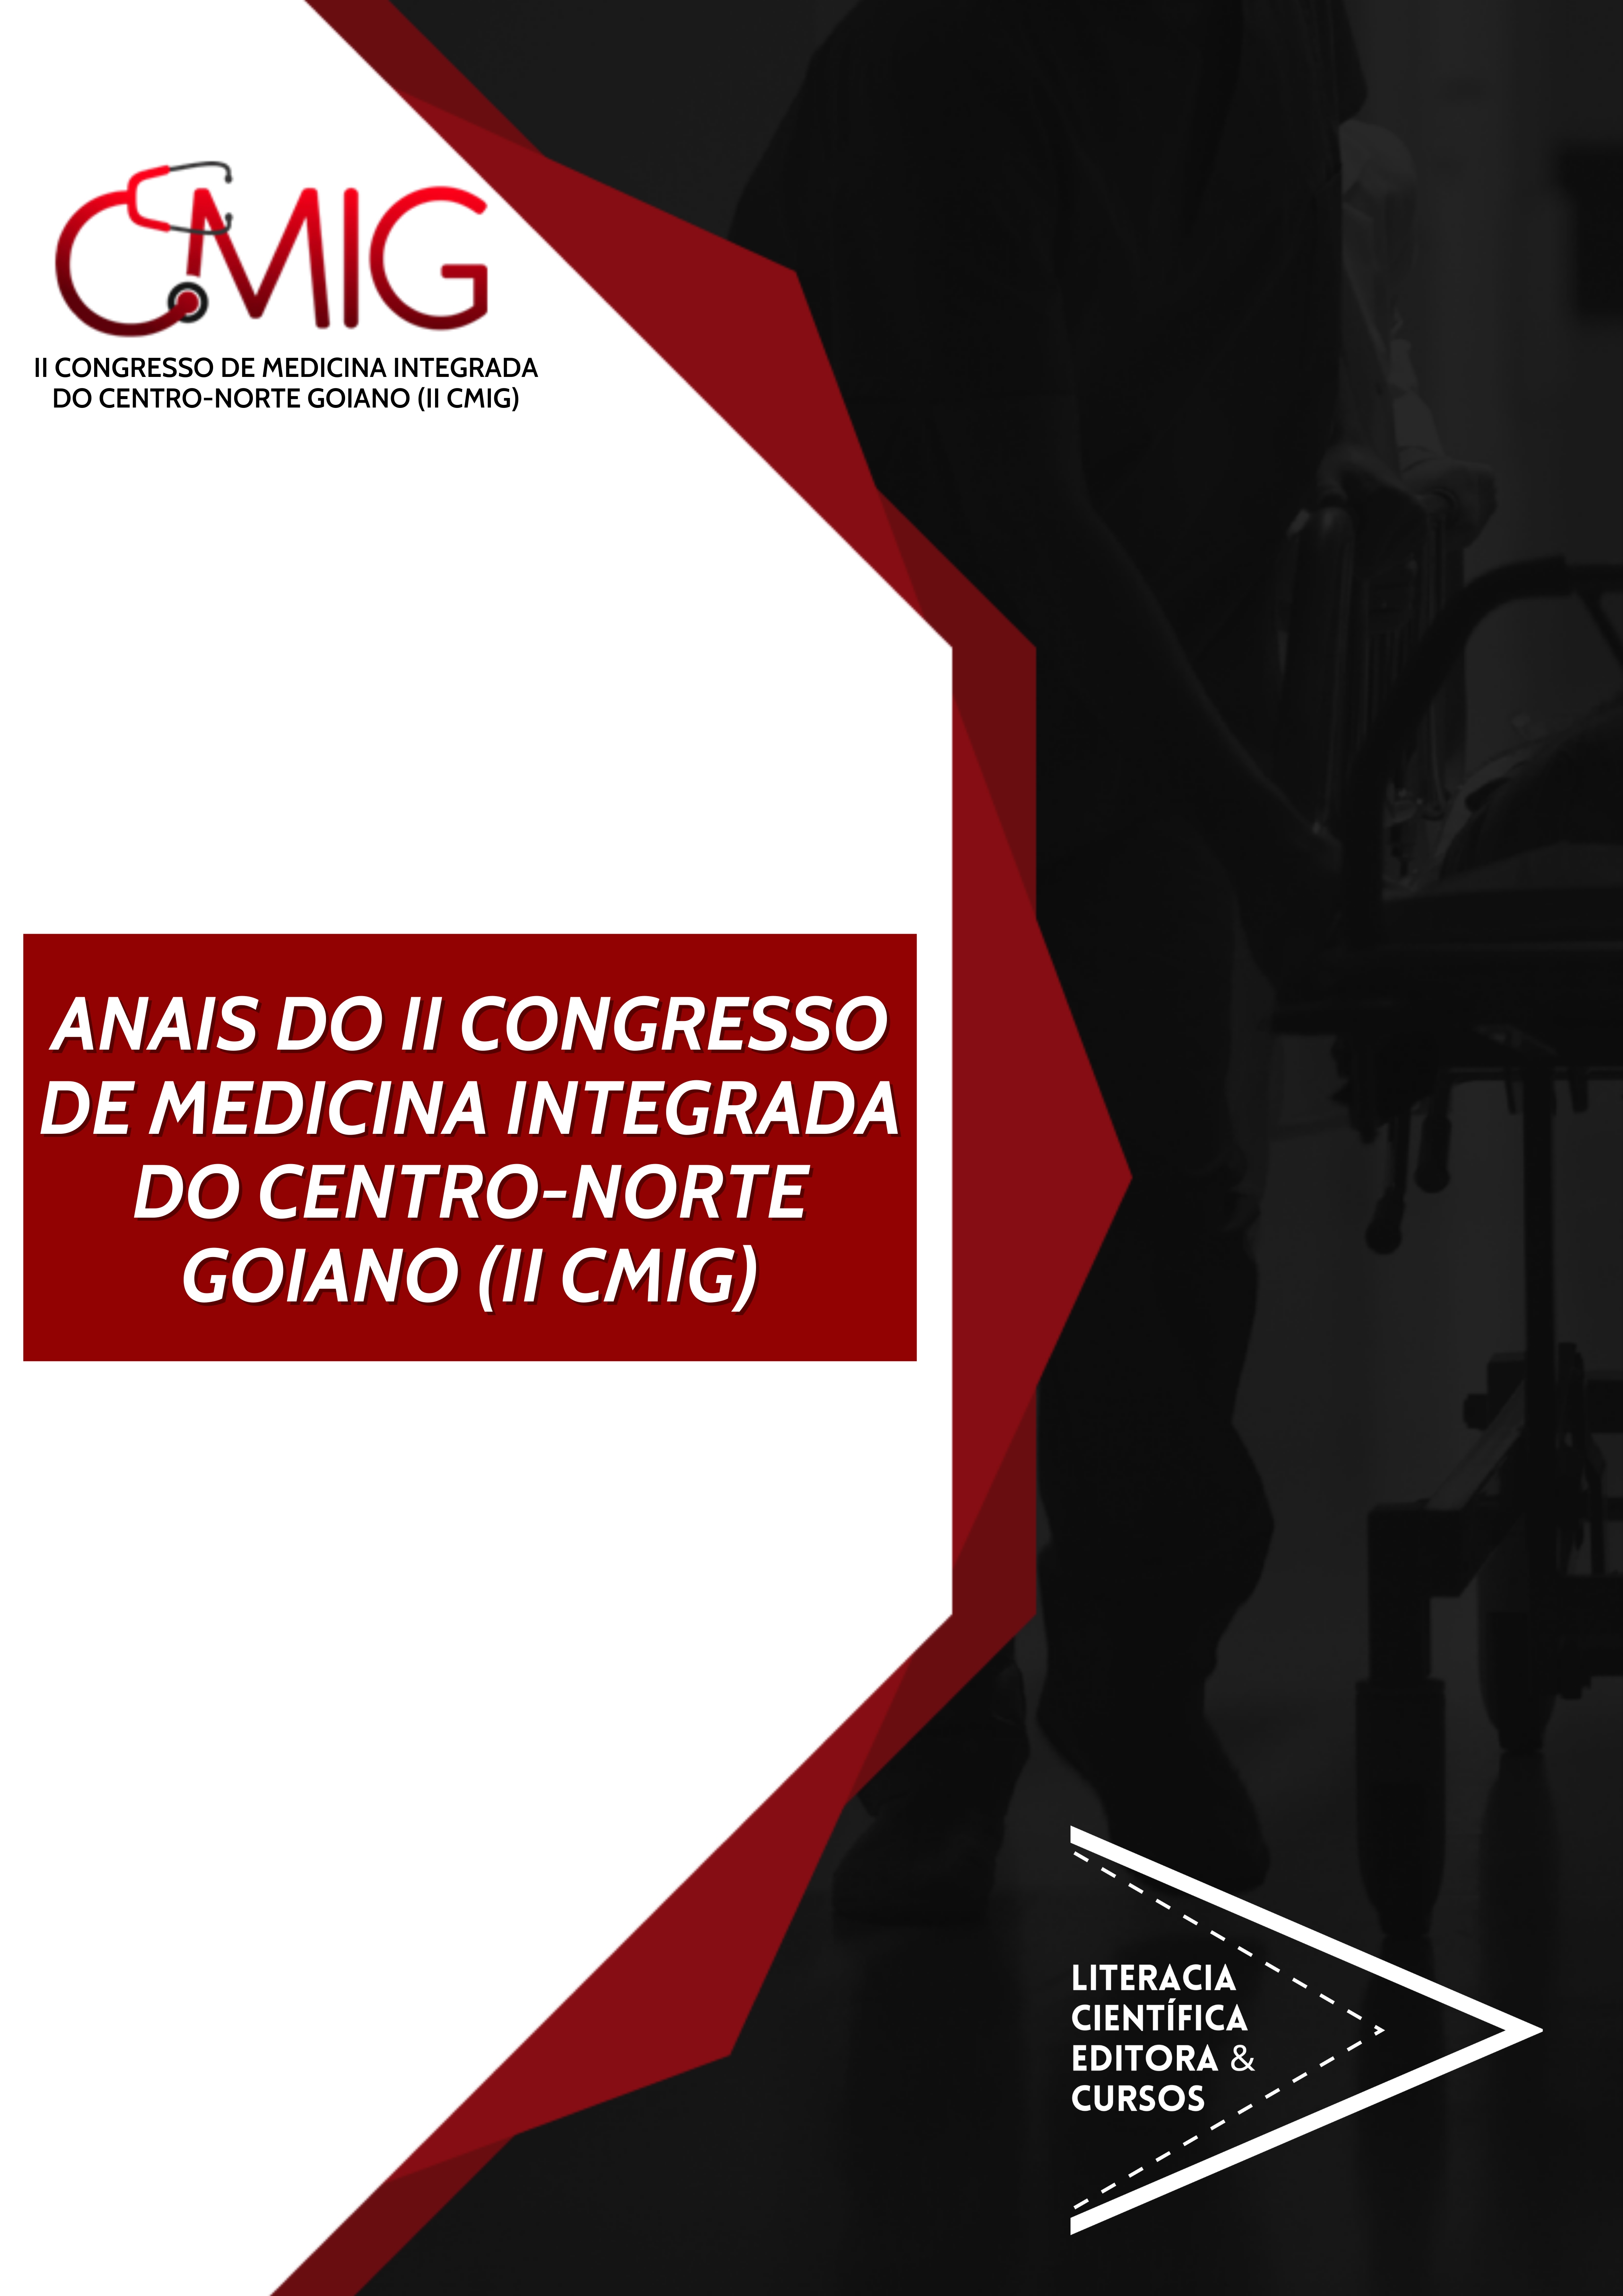 ANAIS DO II CONGRESSO DE MEDICINA INTEGRADA DO CENTRO-NORTE GOIANO (II CMIG)